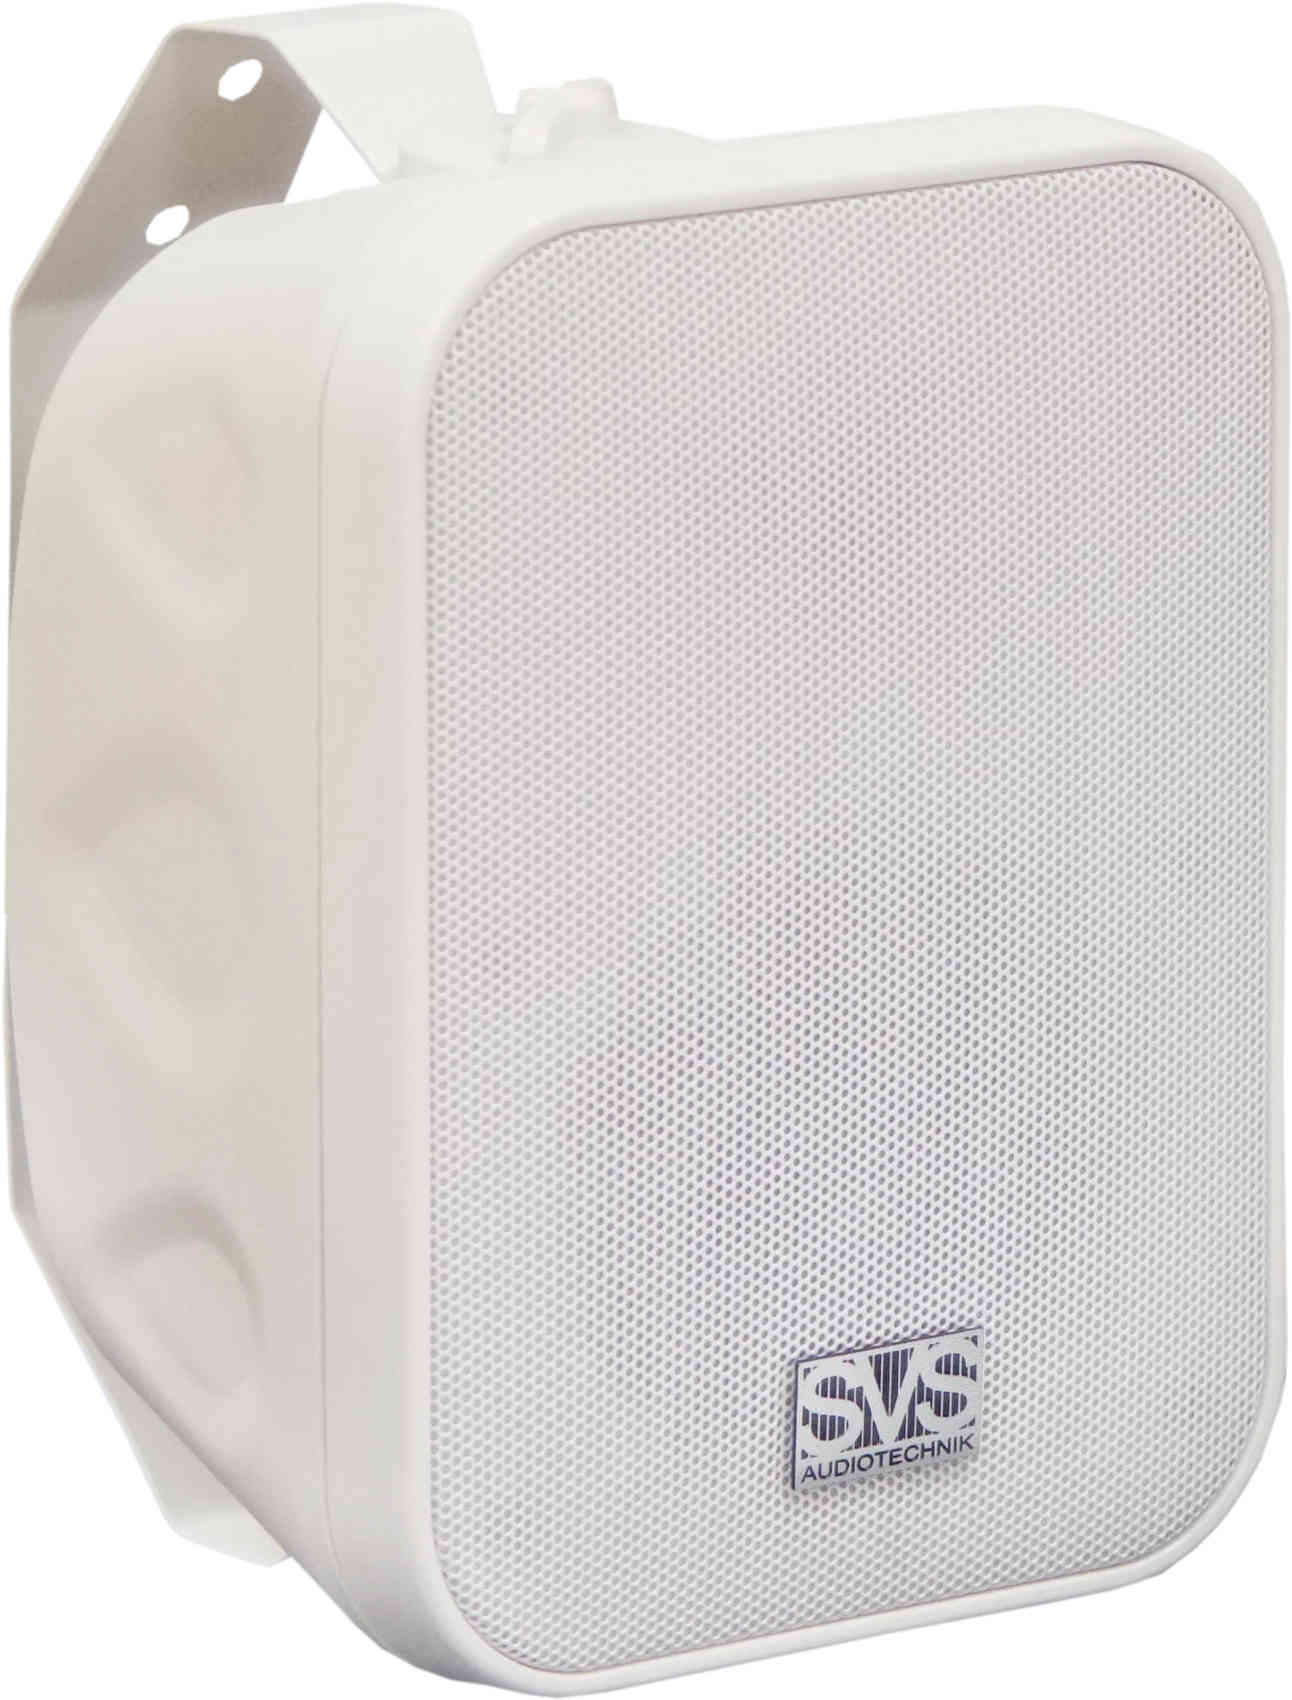 SVS Audiotechnik WSP-40 White - фото 2